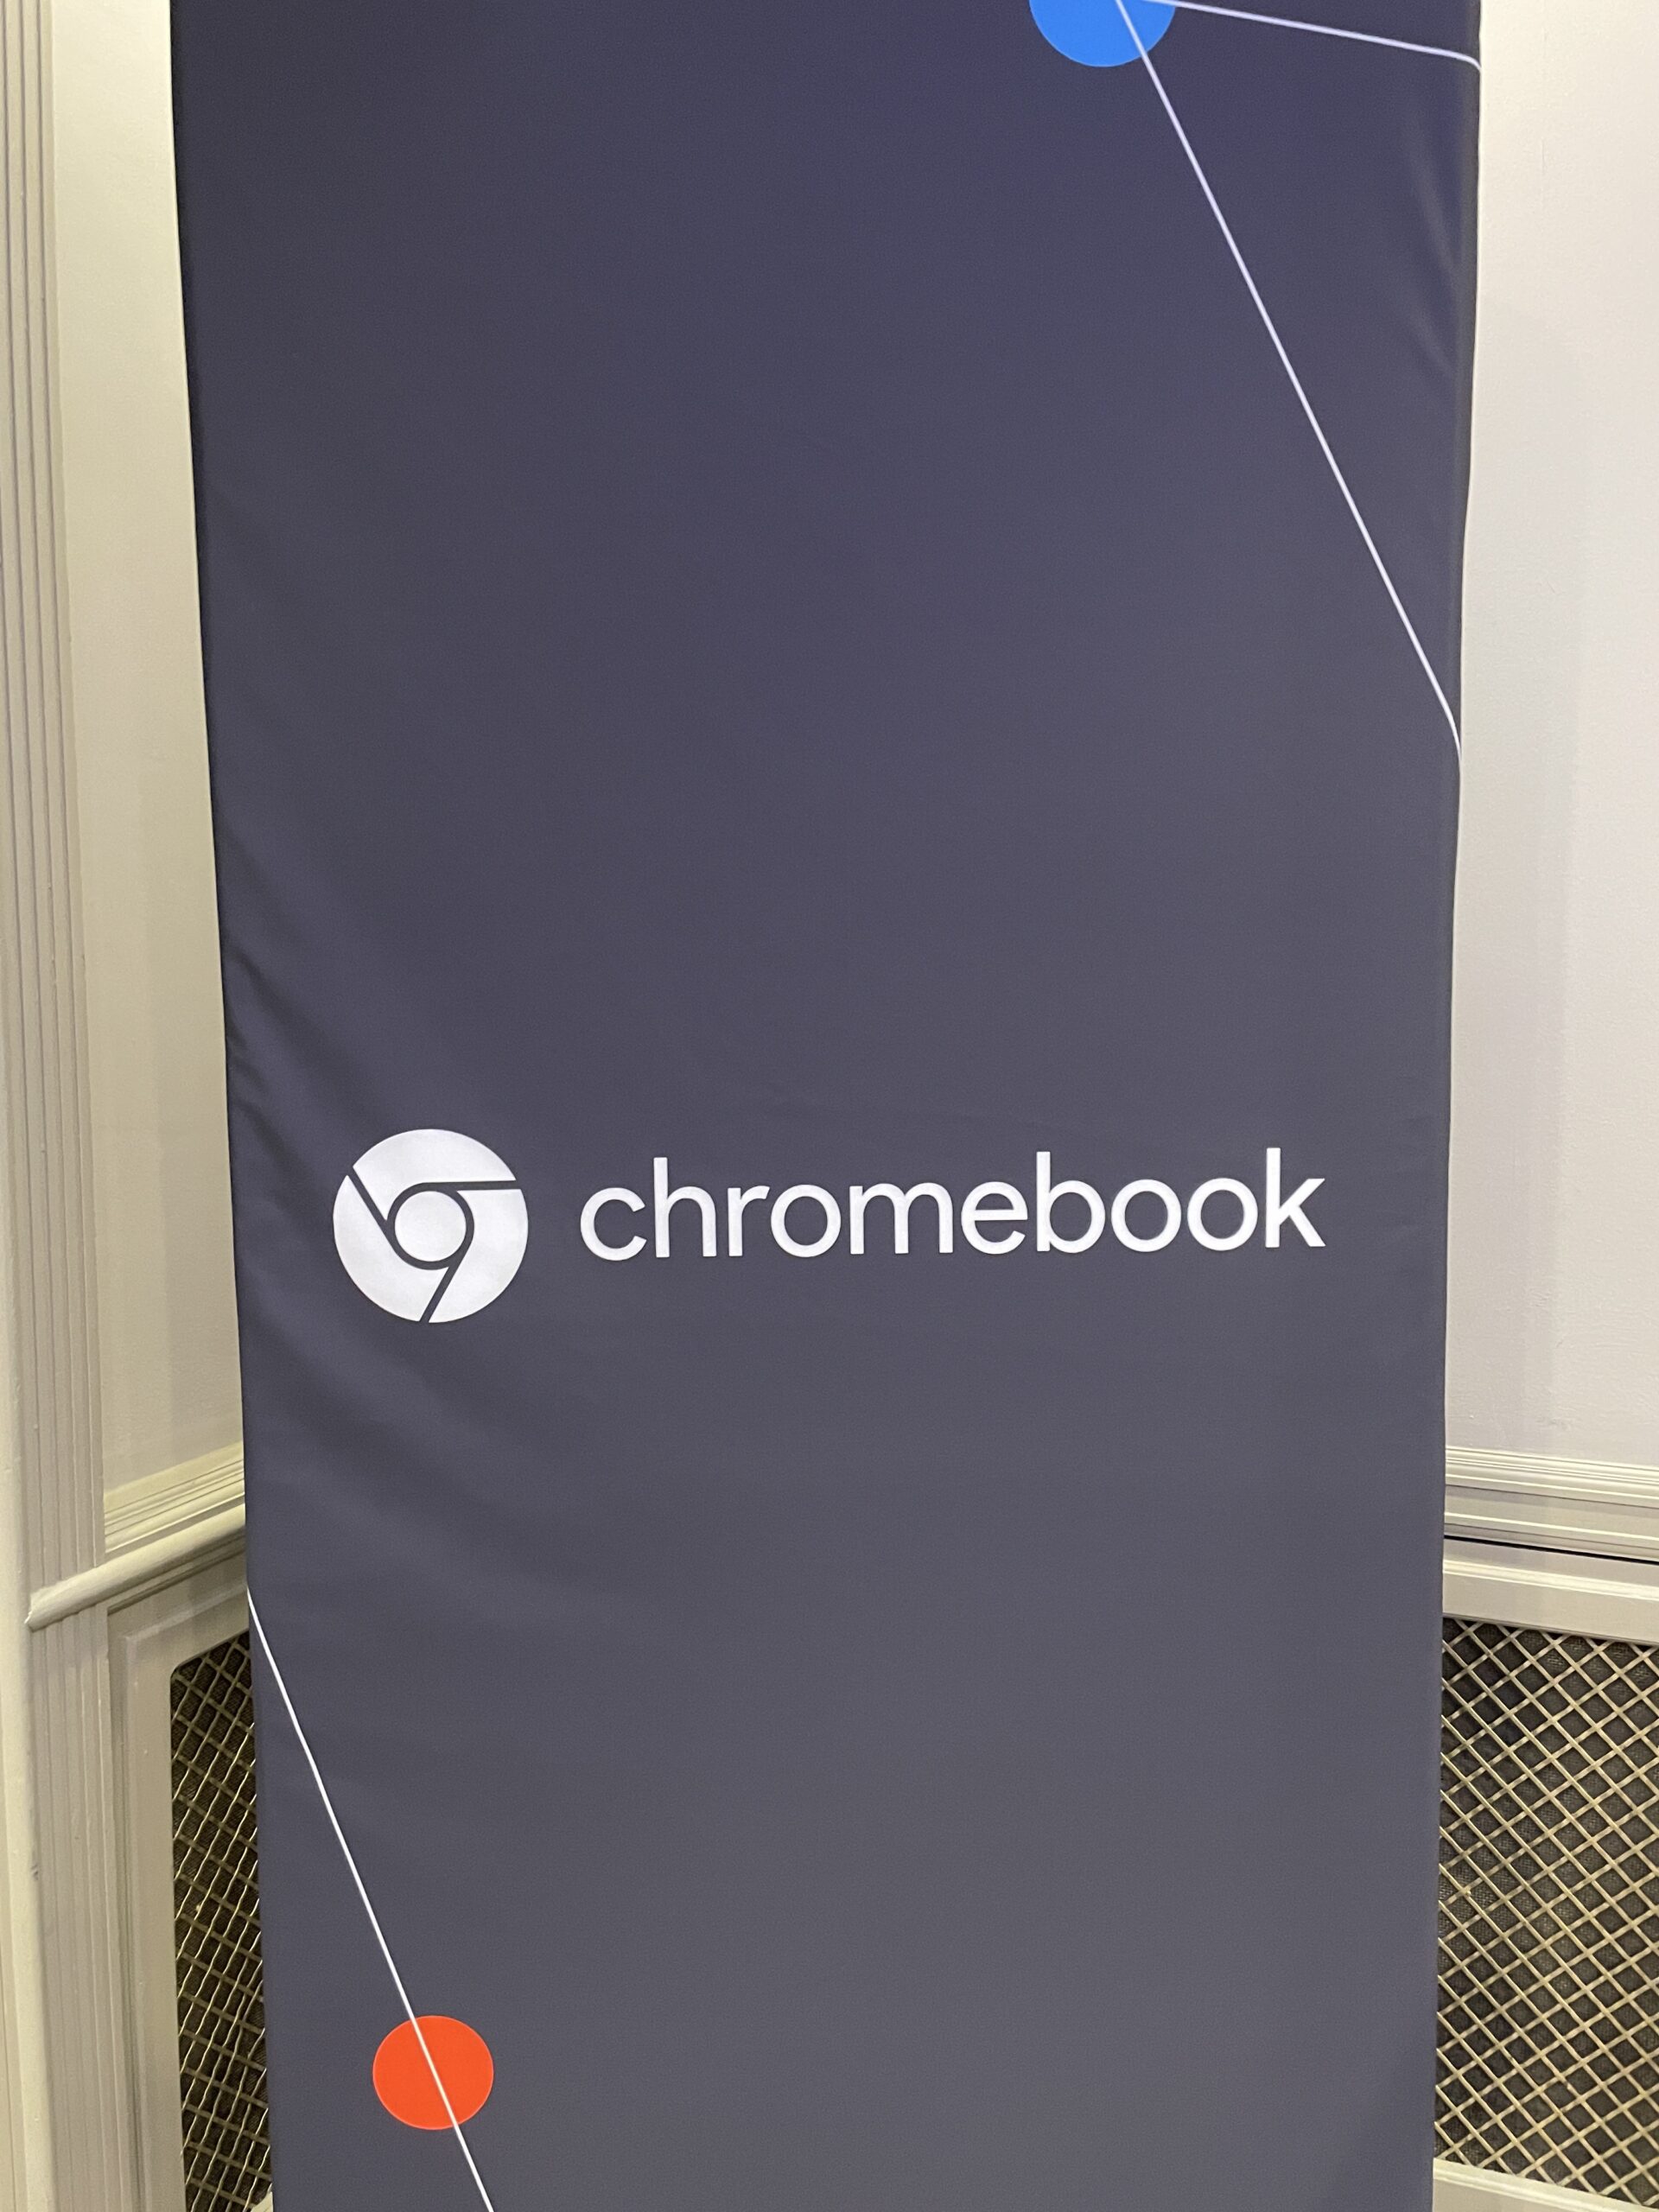 Google Chromebook Event